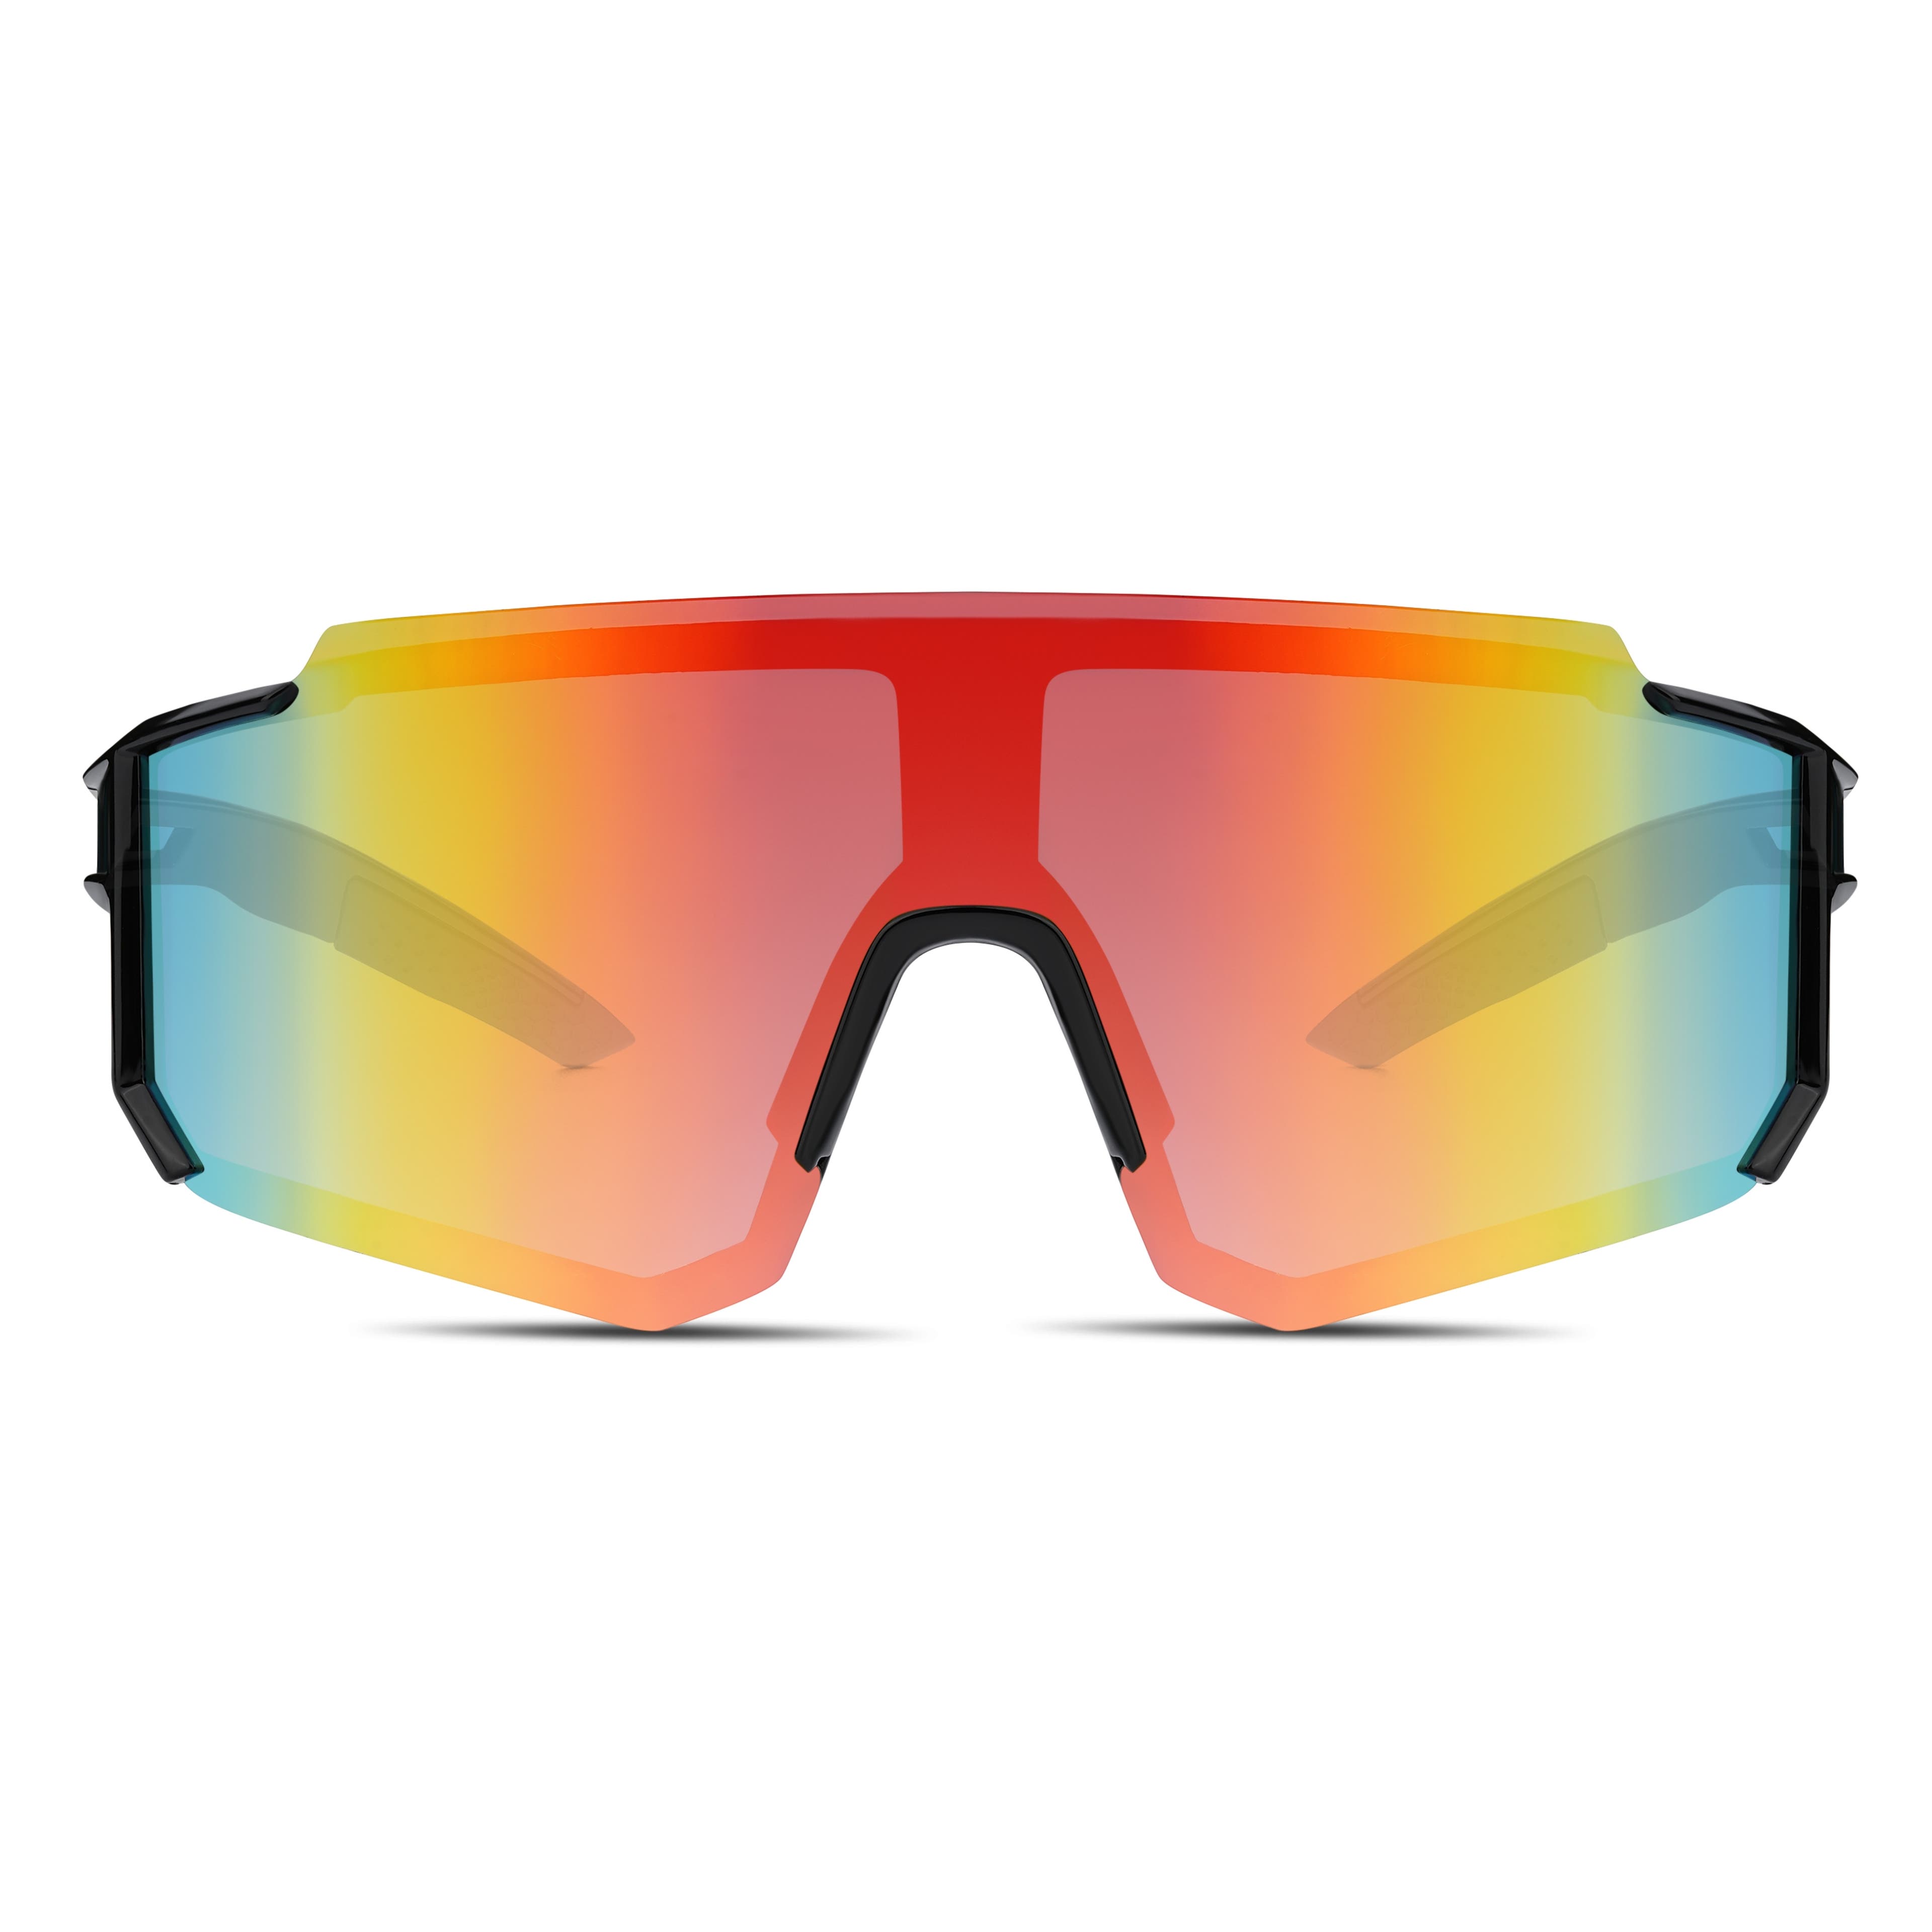 Black & Orange Wraparound Sports Sunglasses